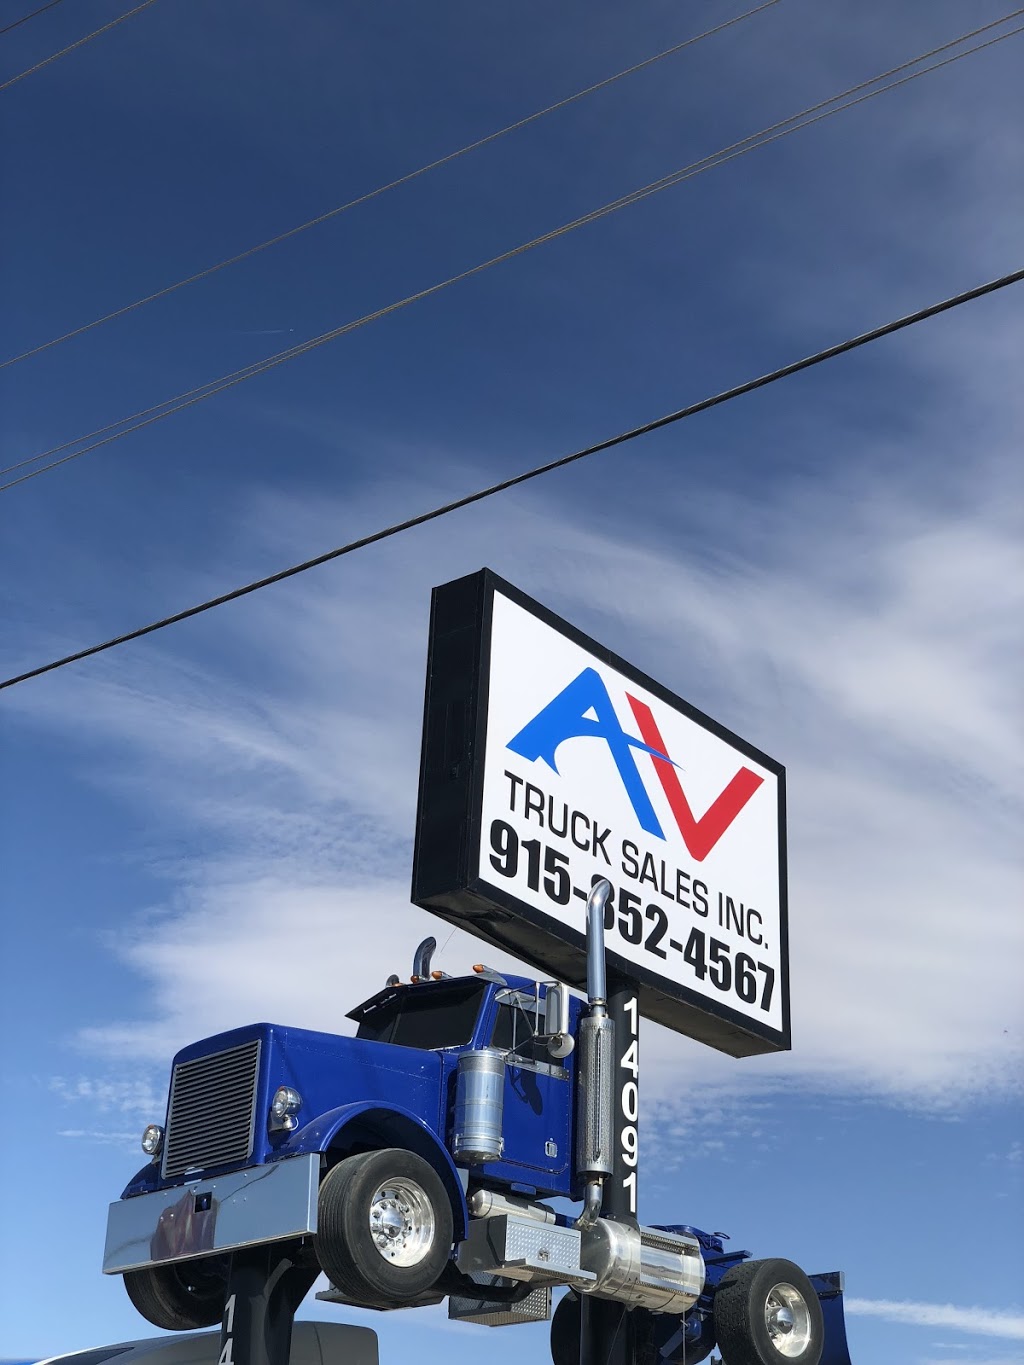 AV Truck Sales | 14091 Gateway Blvd W, El Paso, TX 79928 | Phone: (915) 852-4567